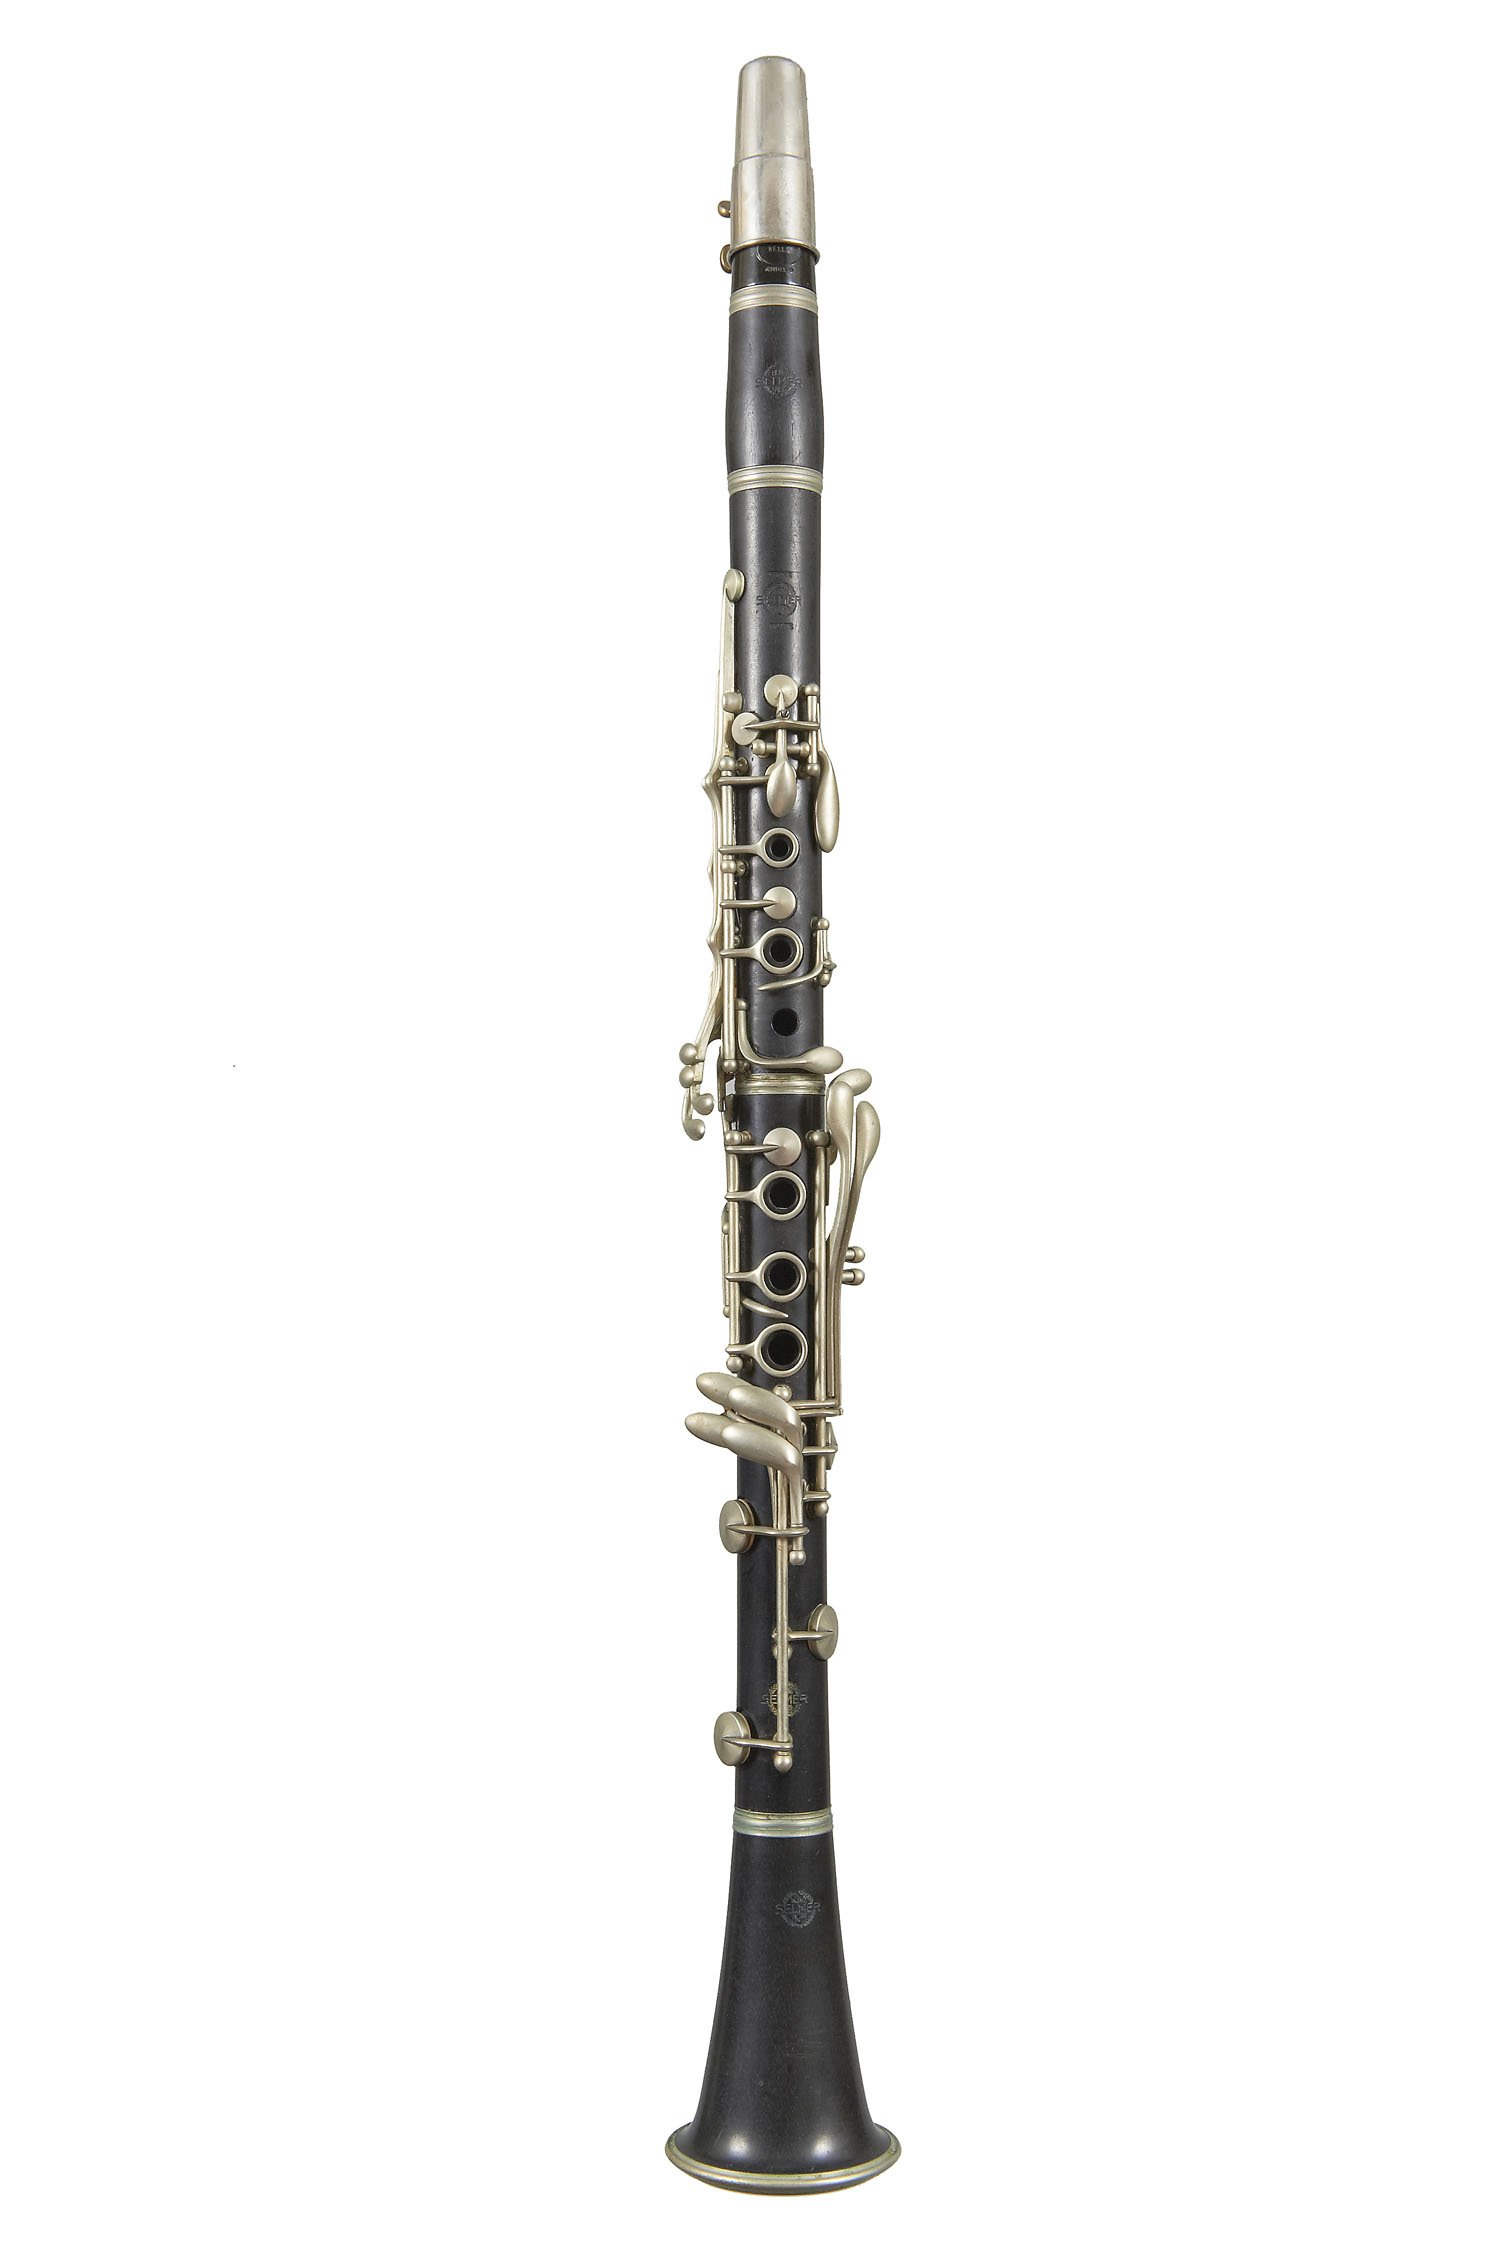 selmer soloist clarinet serial numbers